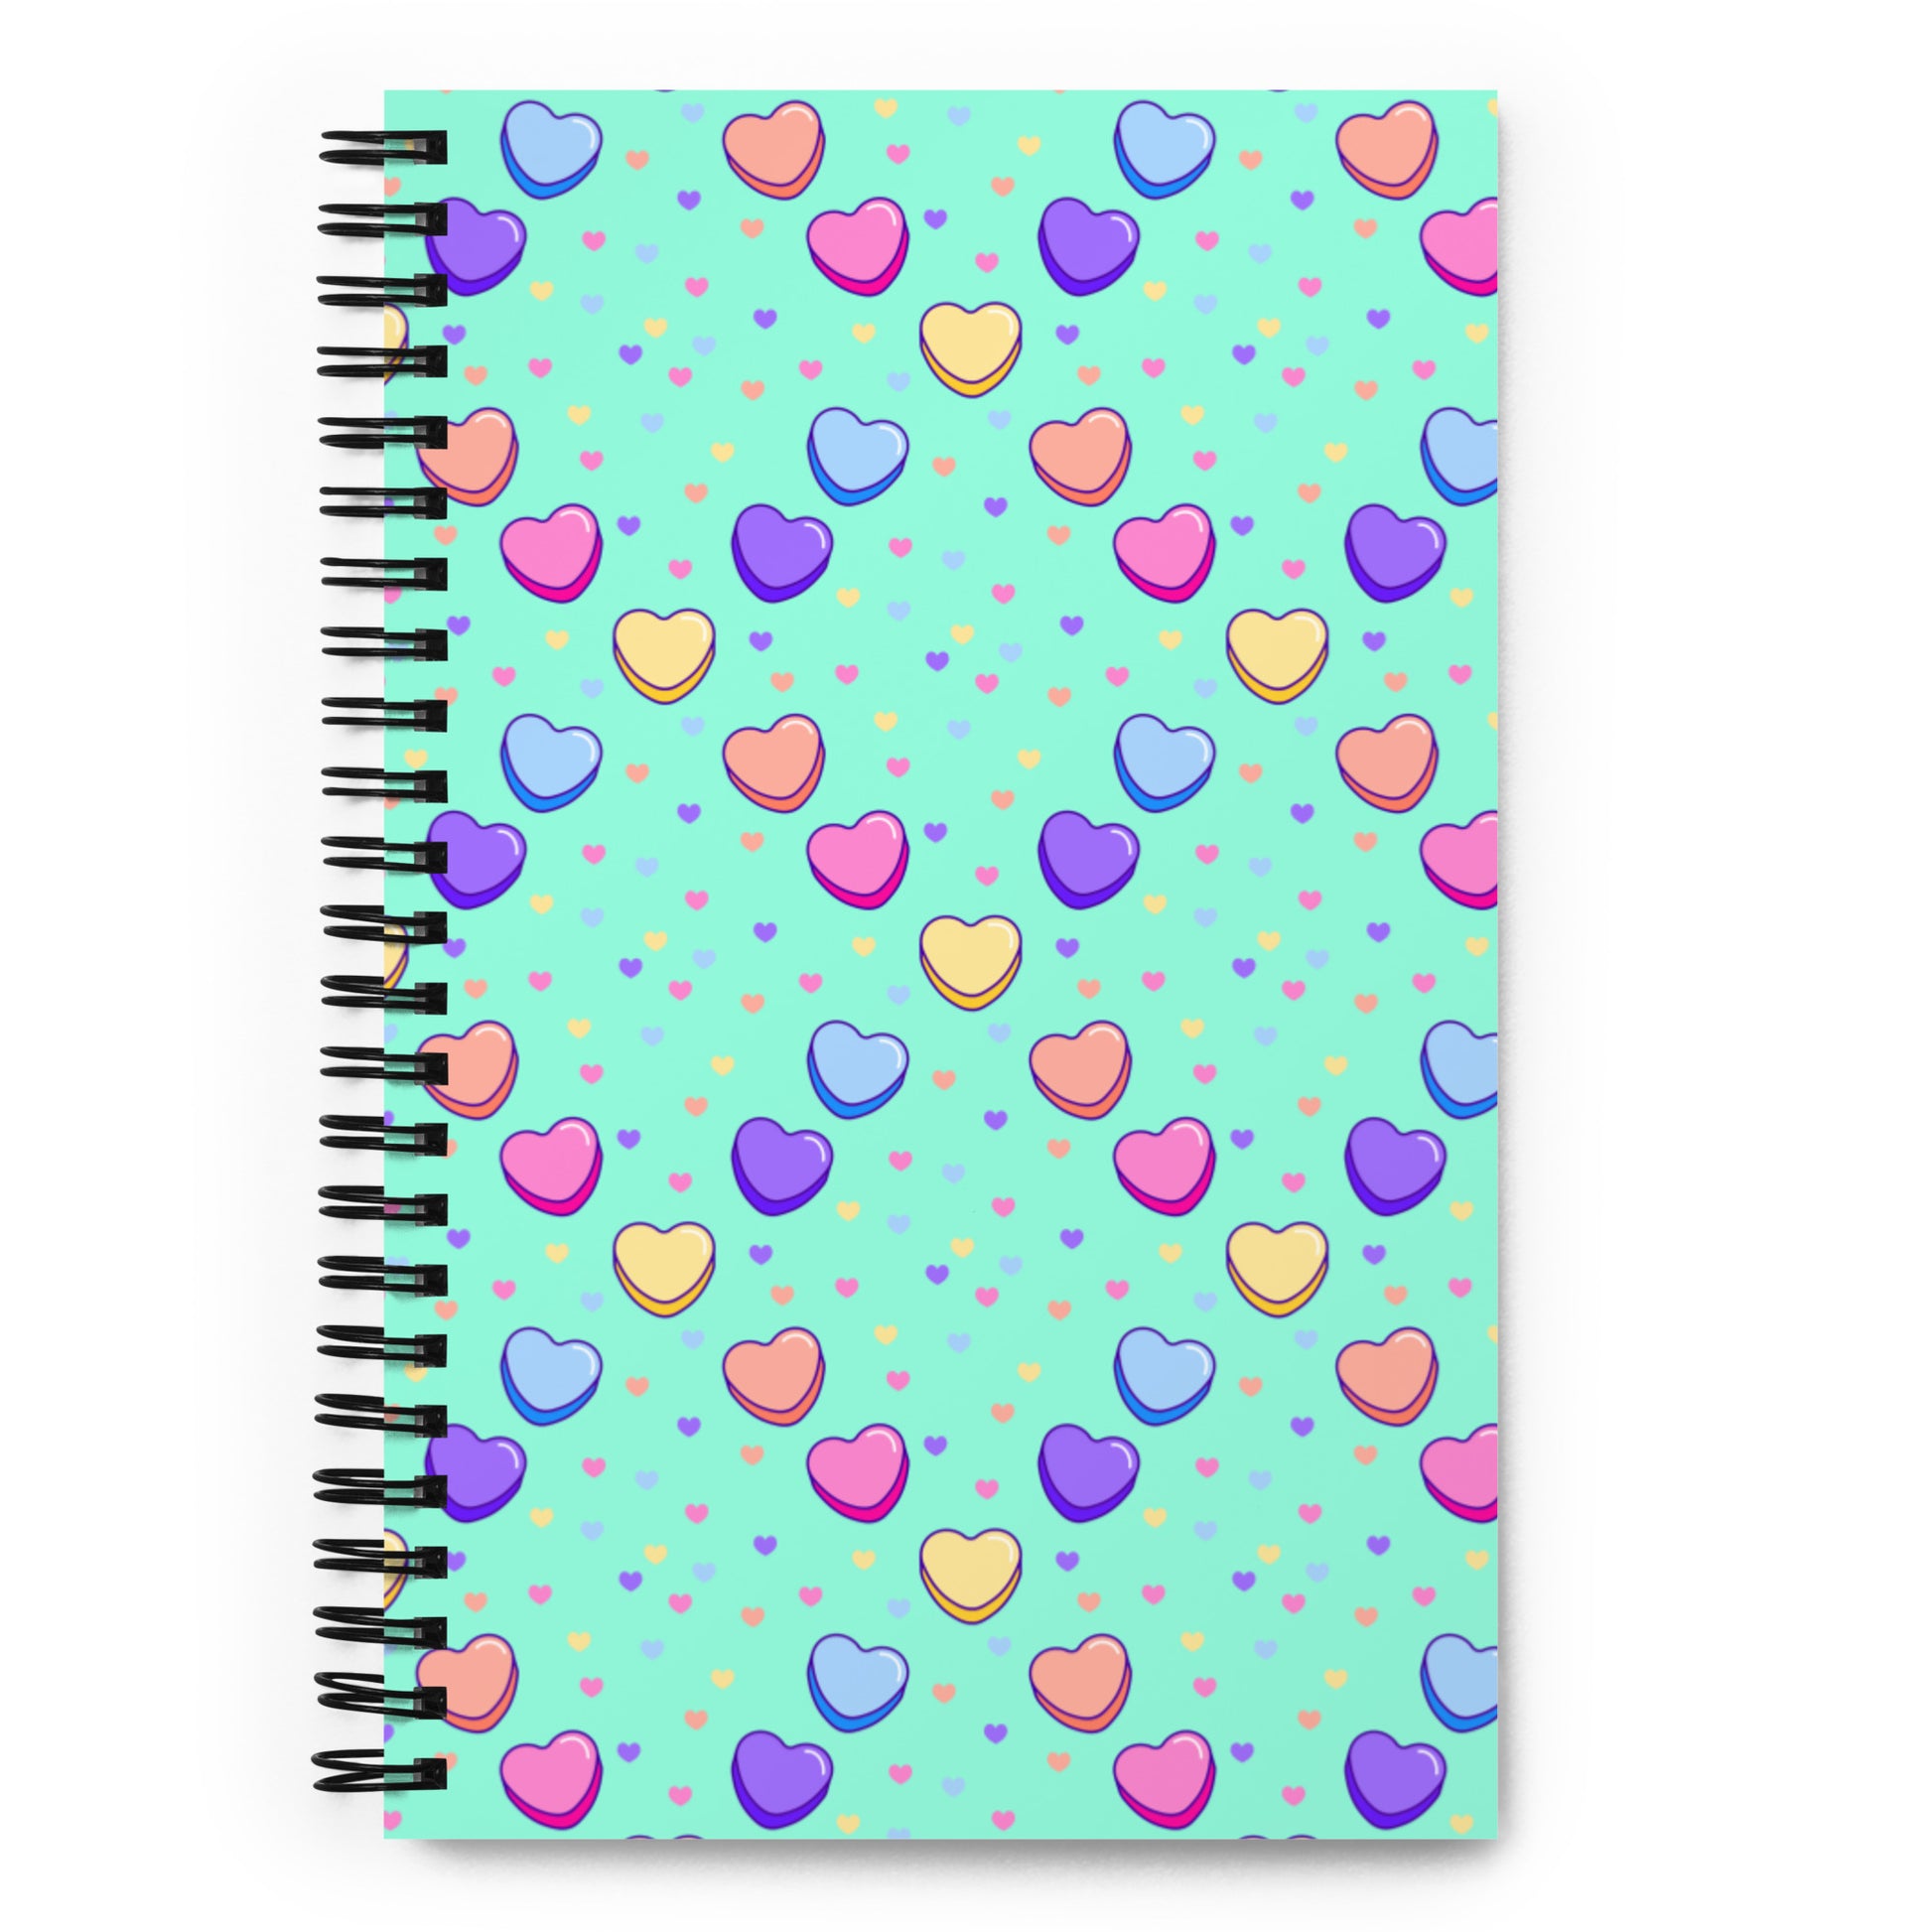 spiral bound dot grid notebook with a criss-cross candy heart design 